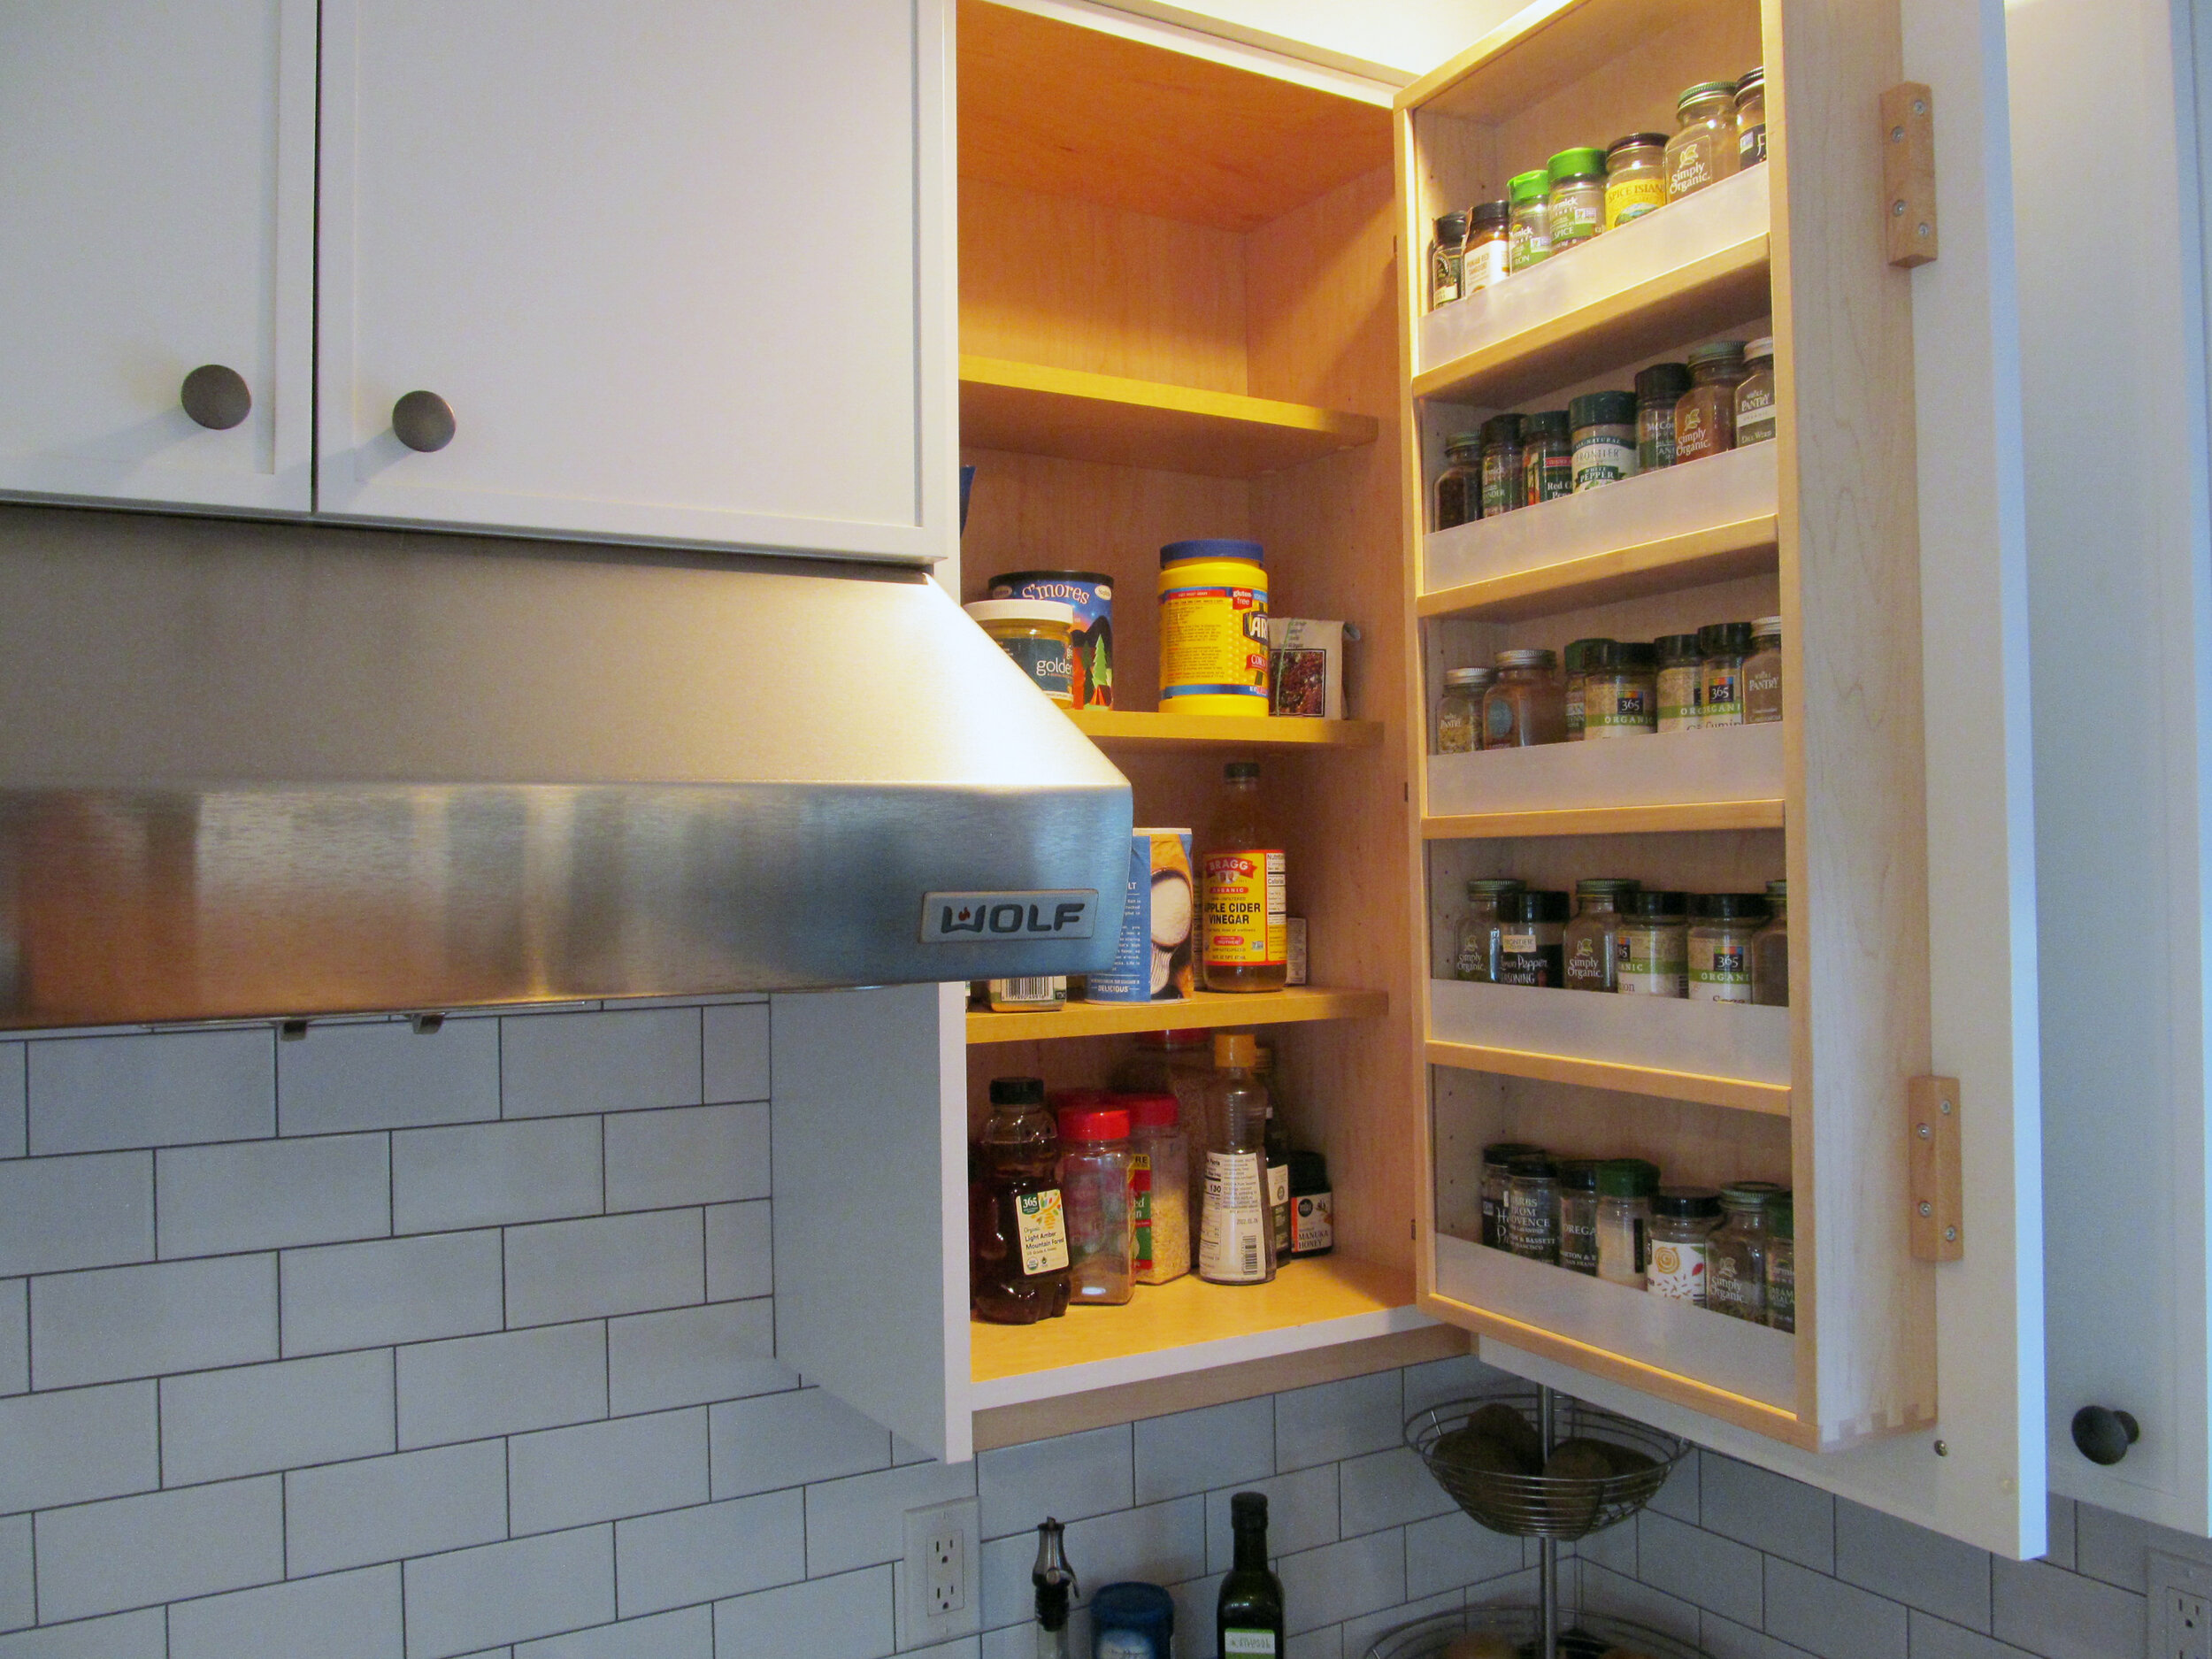 A built-in spice rack keeps seasonings organized and handy.